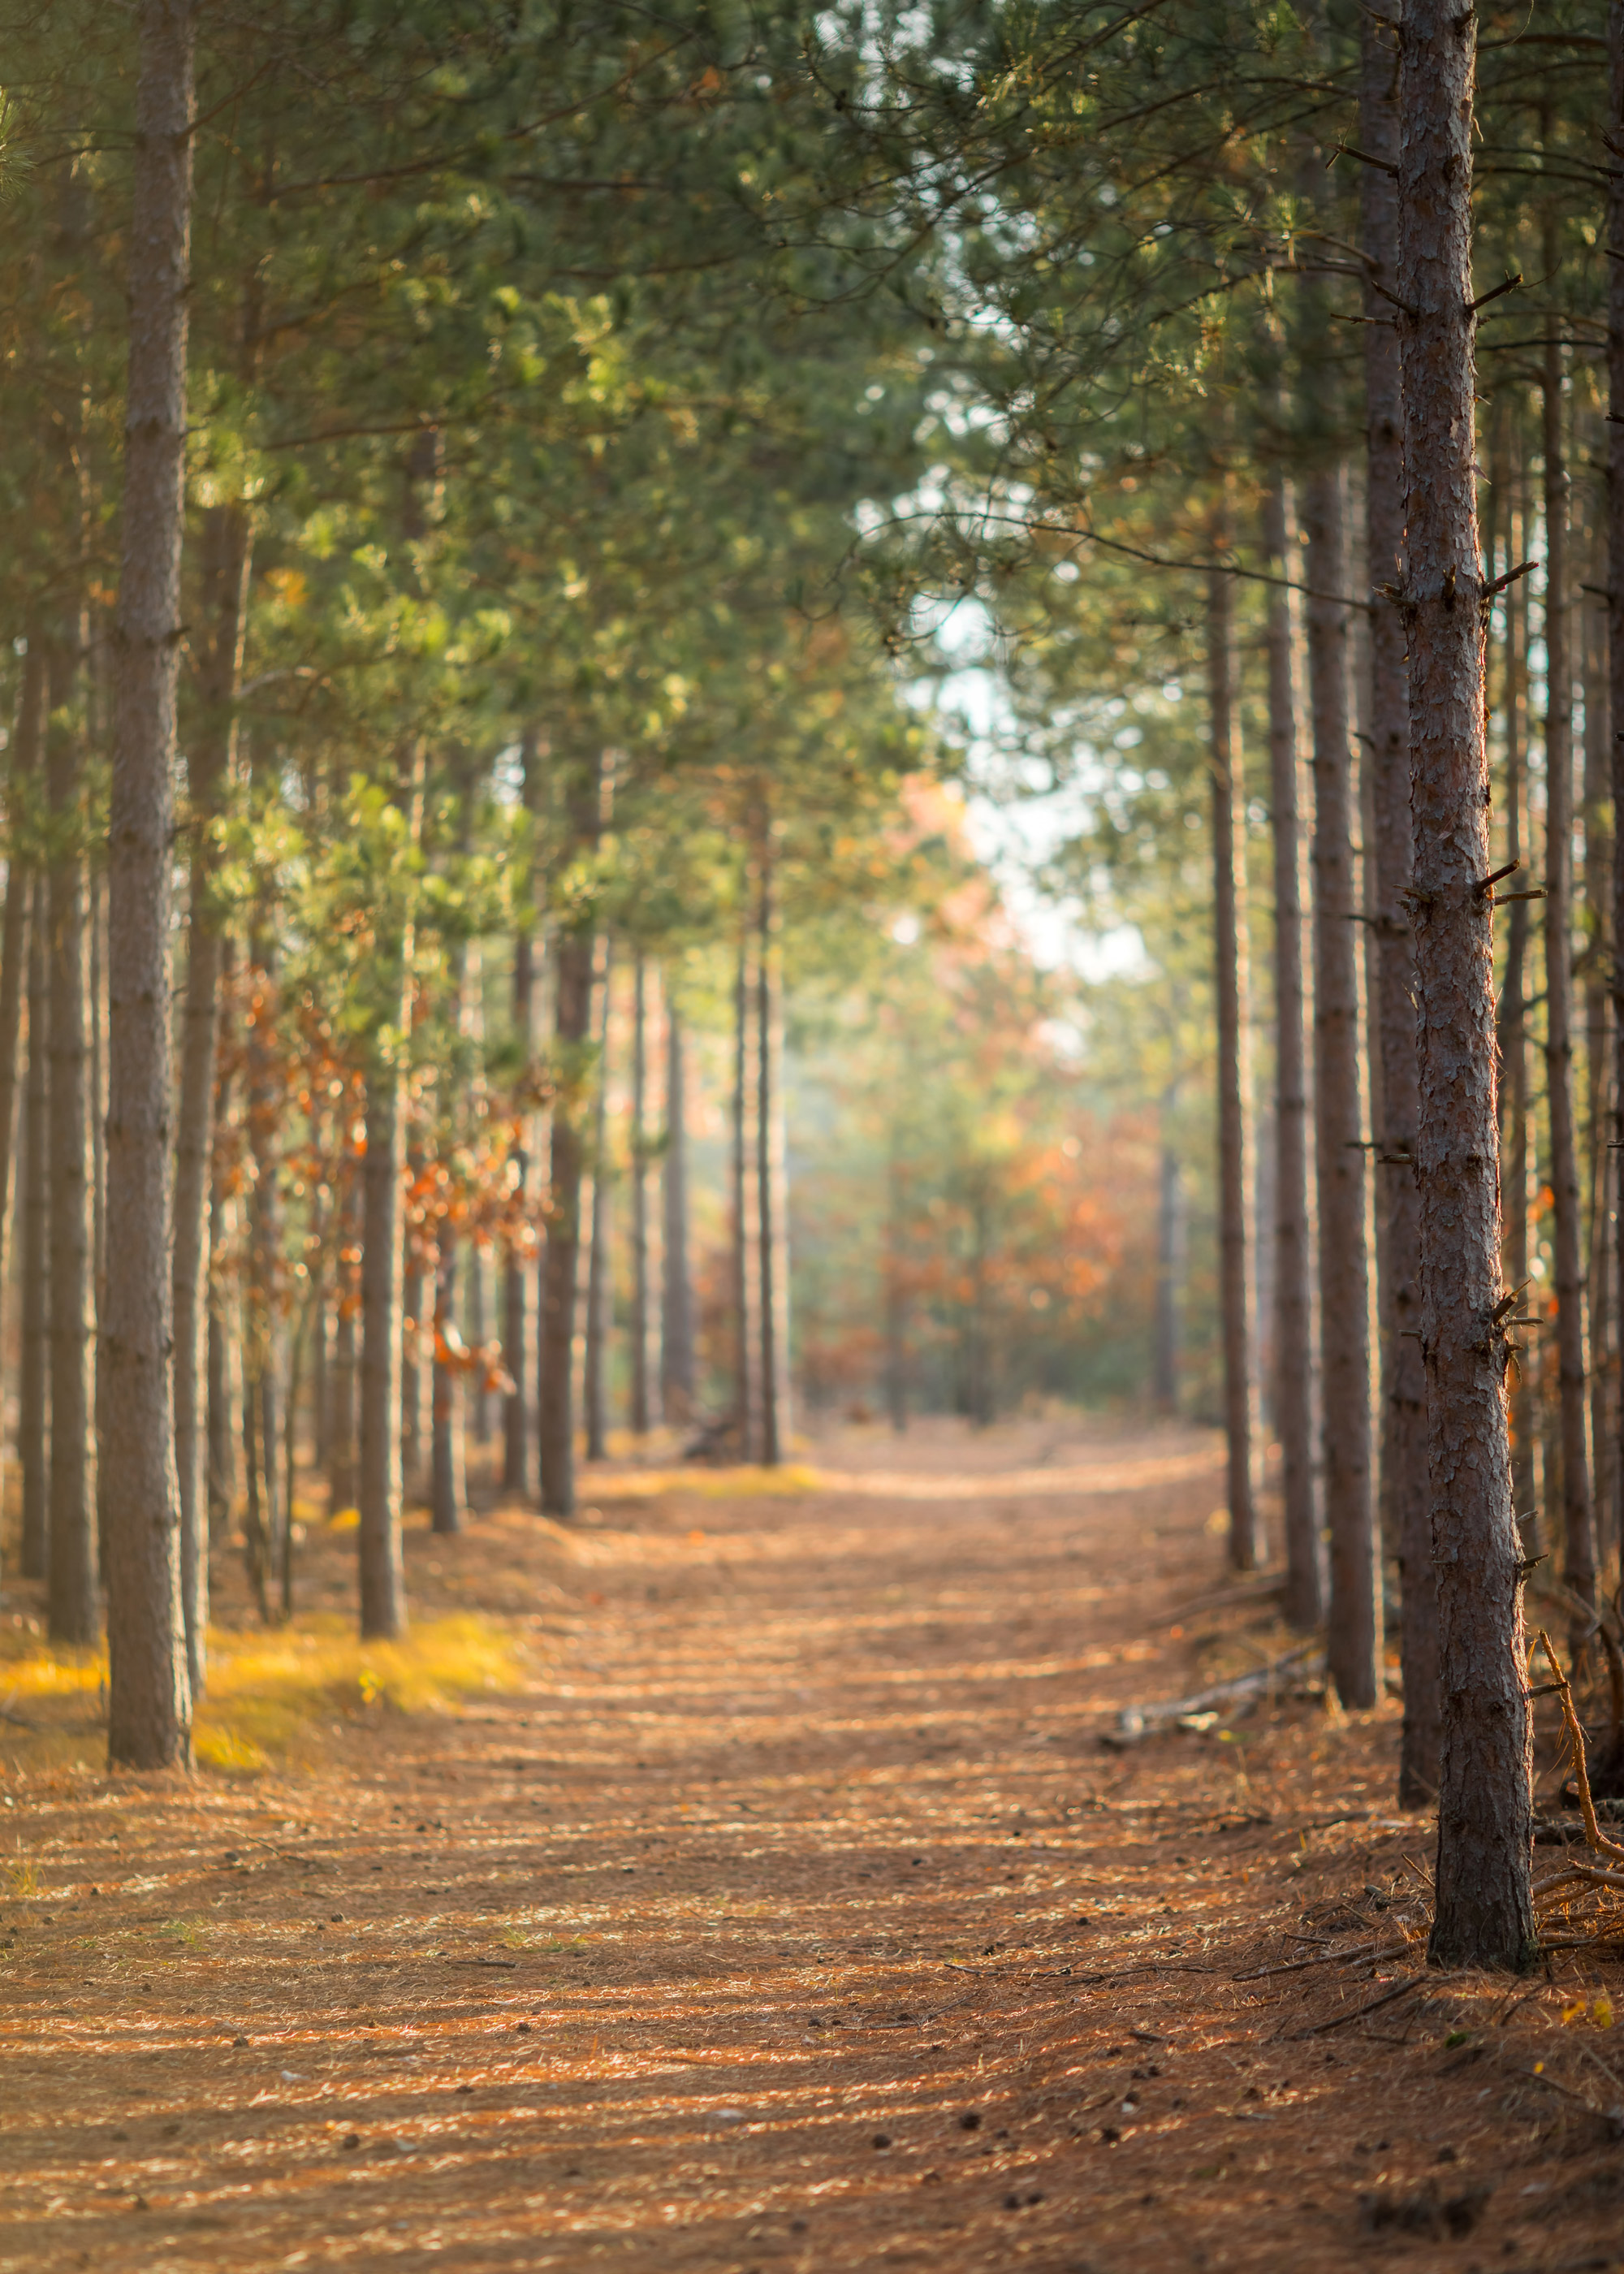 a path through the trees in autumn